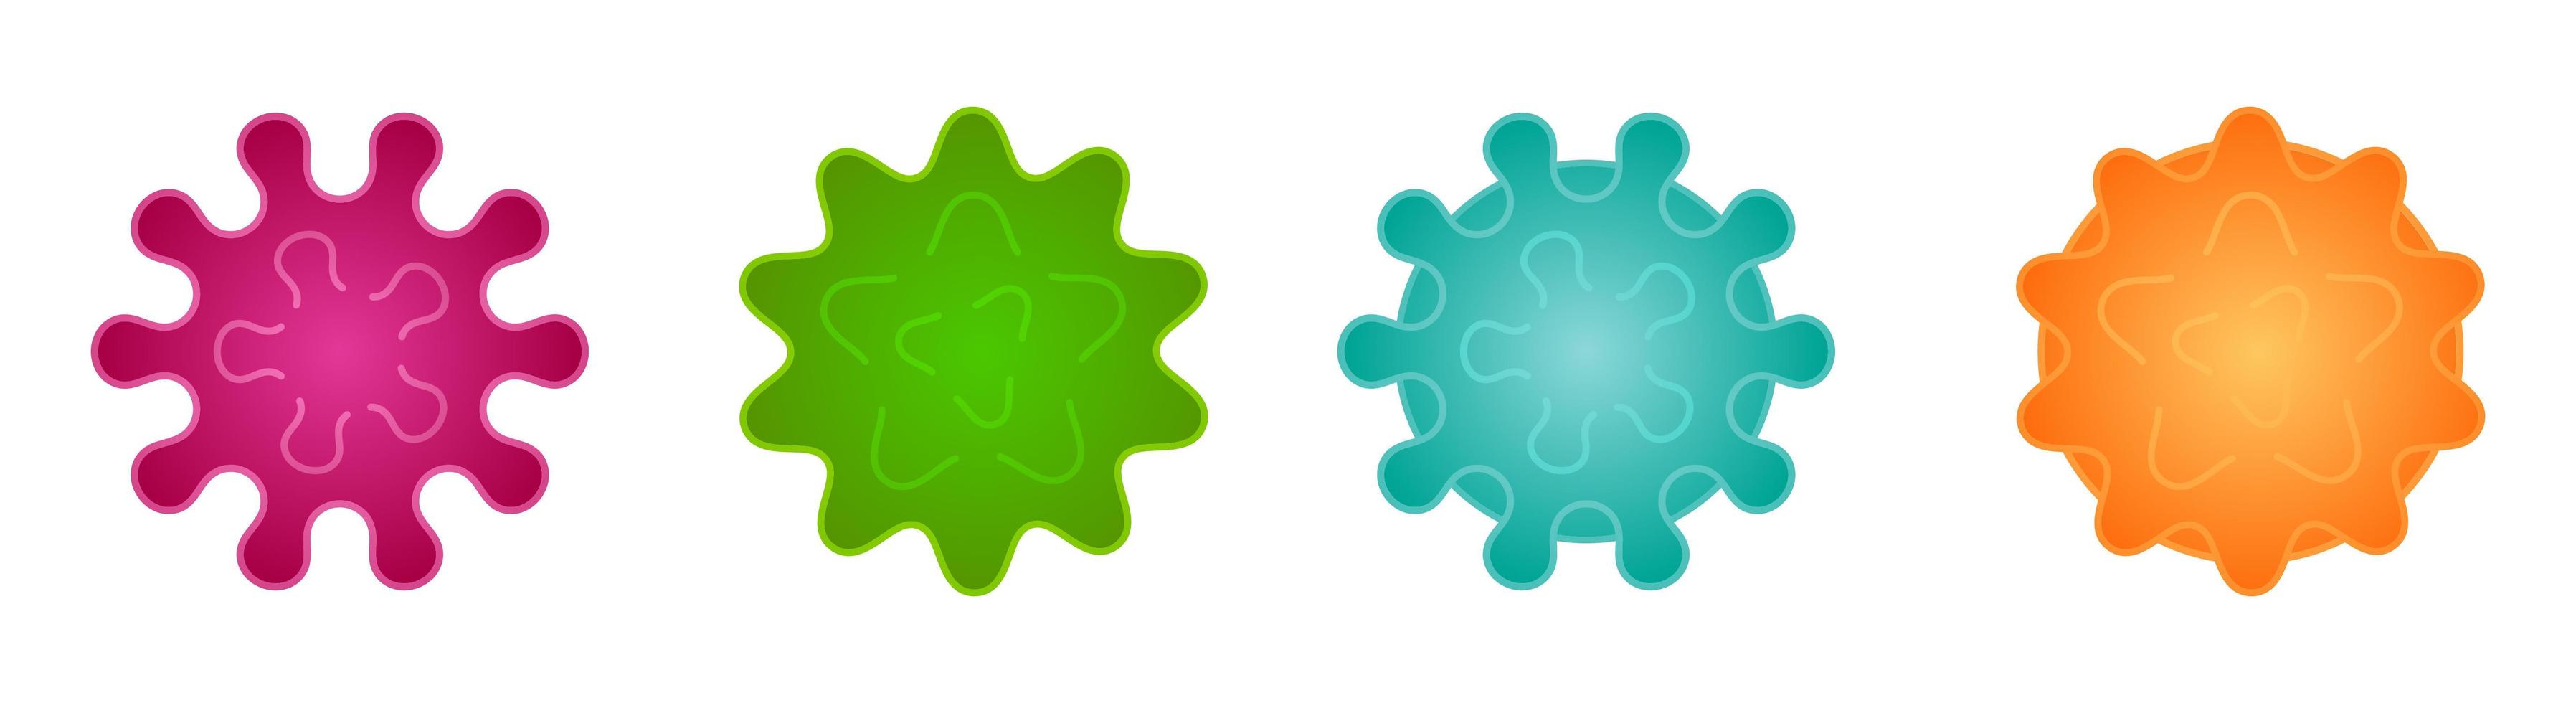 conjunto de desenhos animados de vírus e bactérias vetor